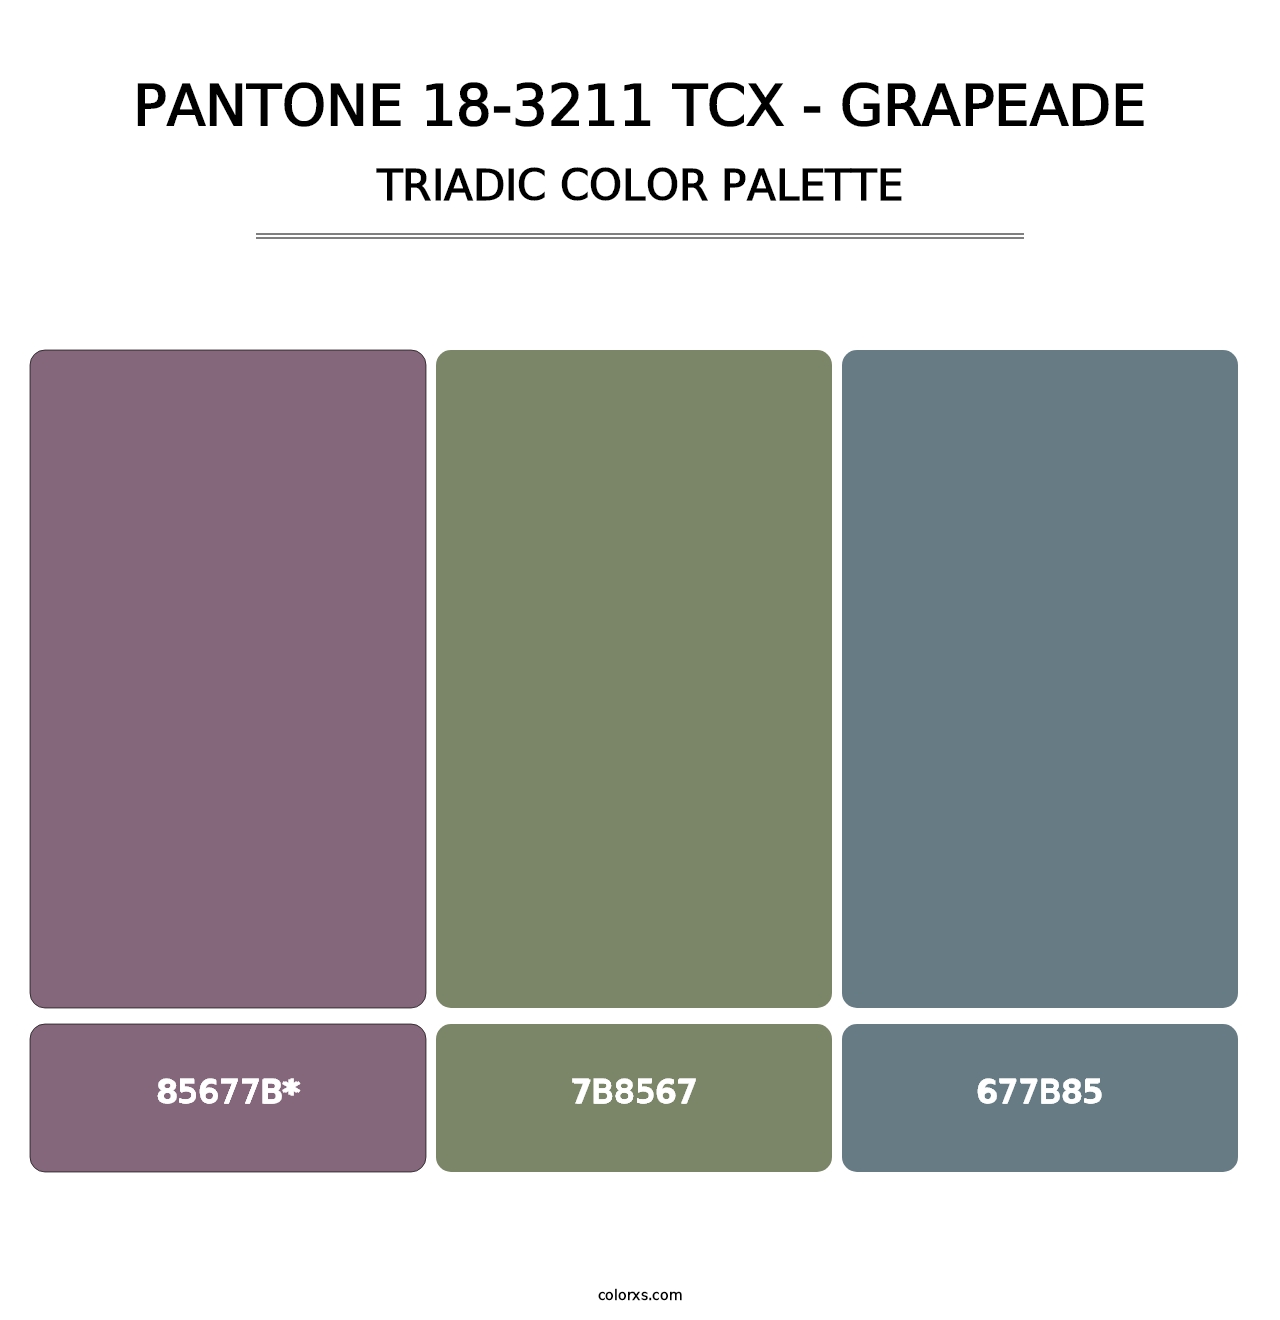 PANTONE 18-3211 TCX - Grapeade - Triadic Color Palette